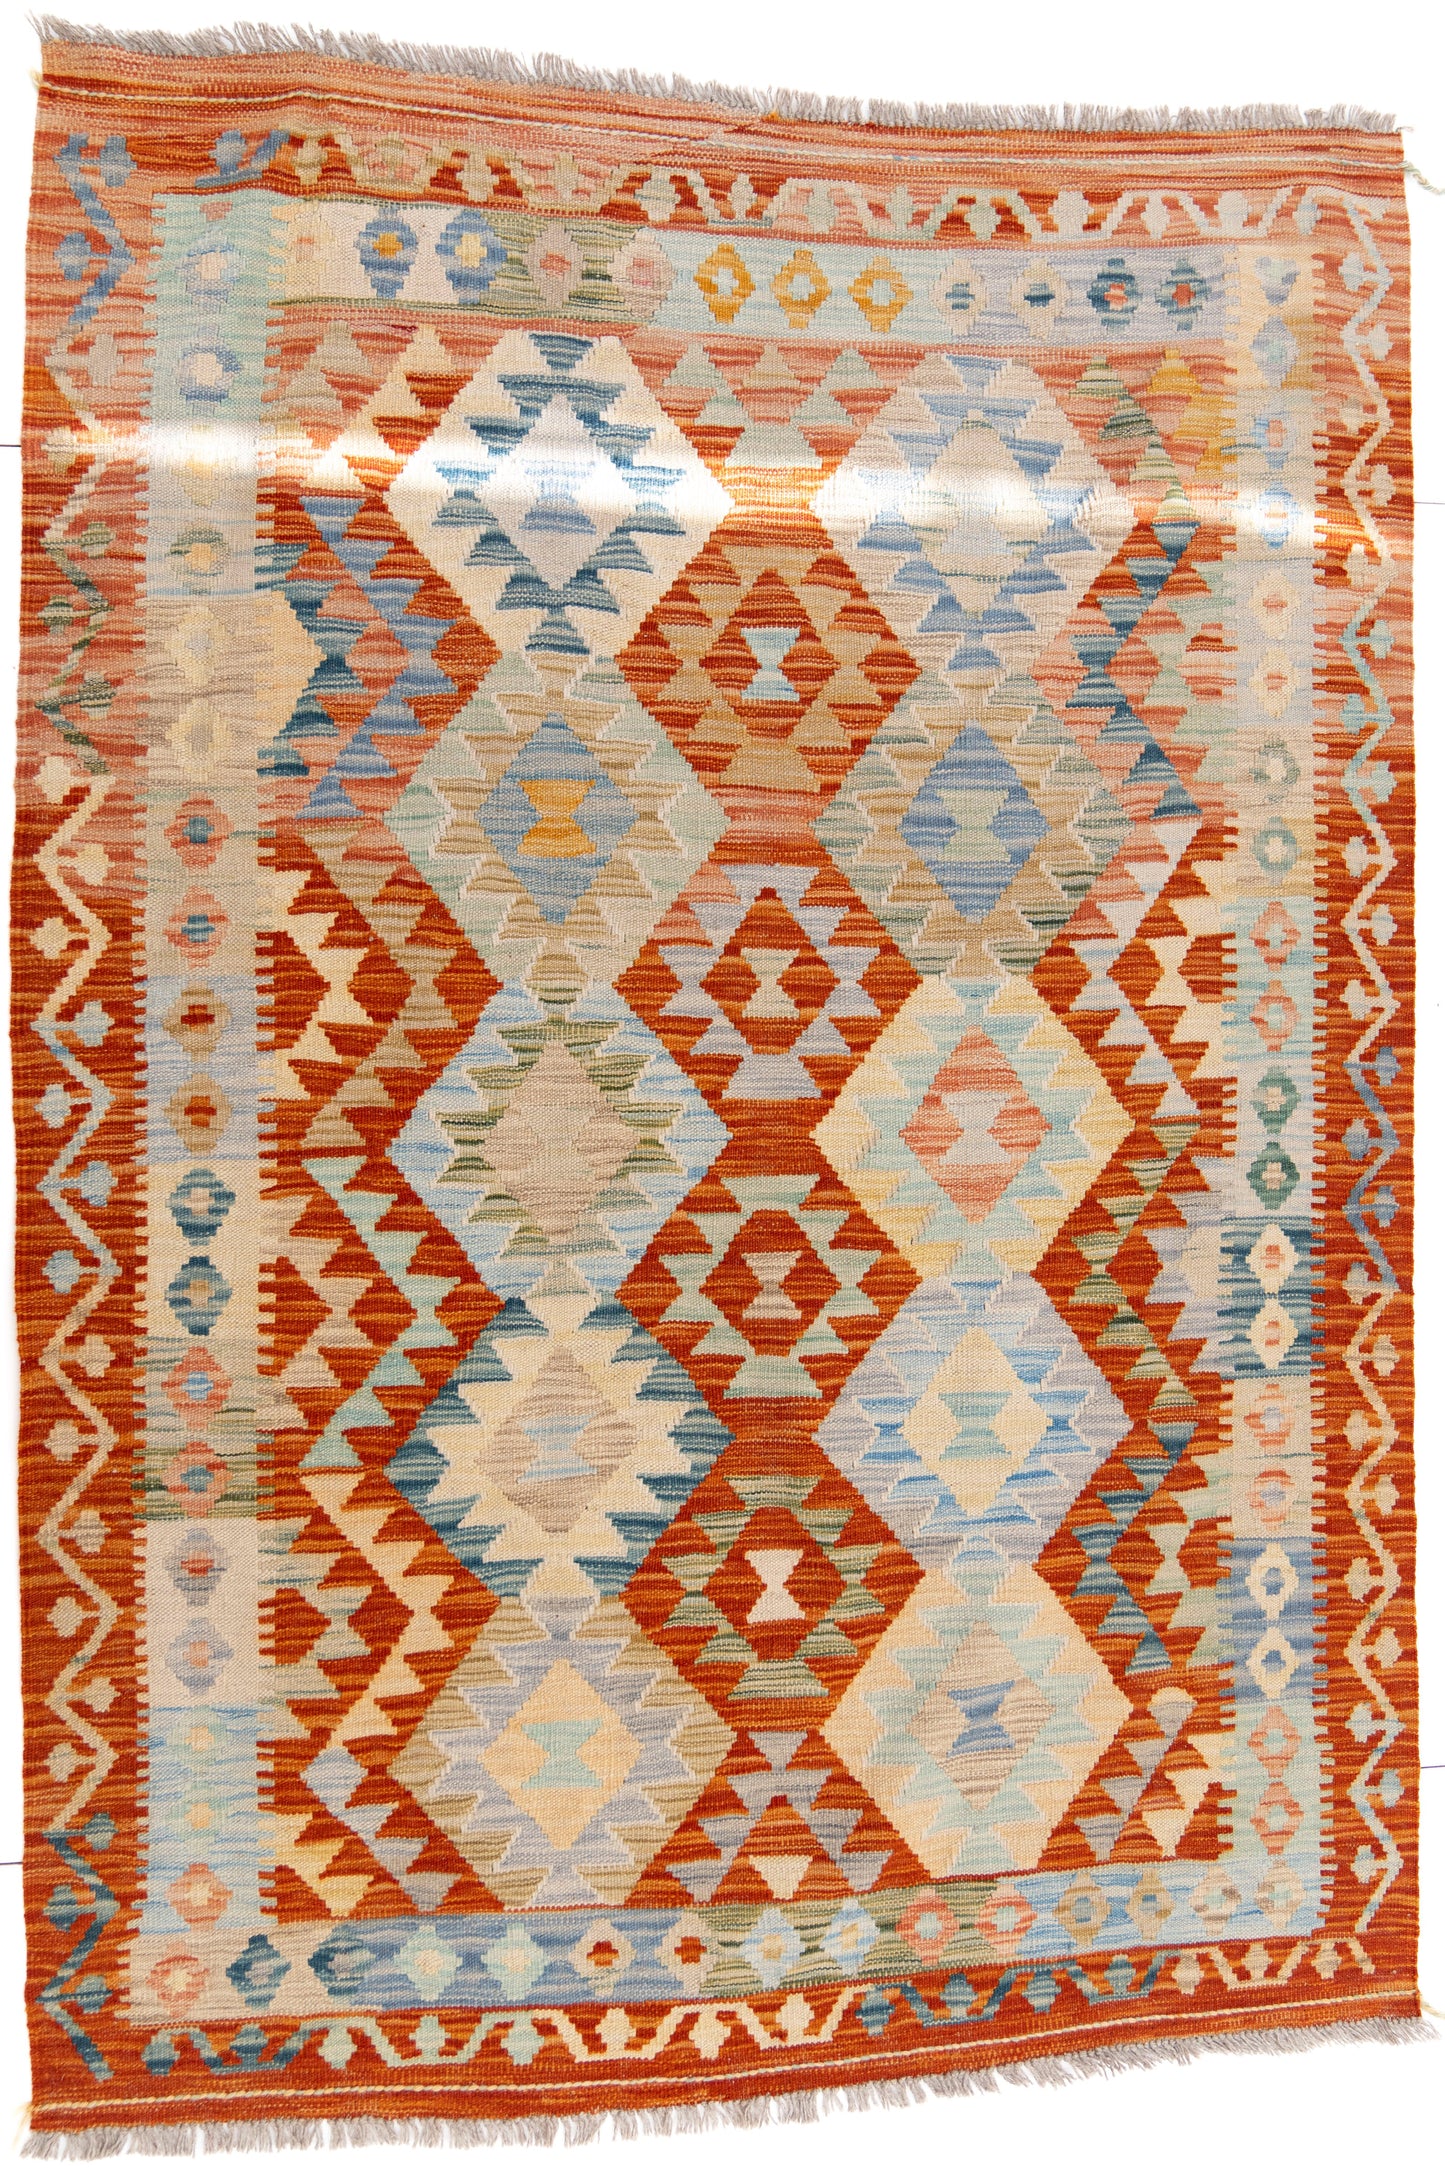 Multicoloured Orange Kilim Carpet with Bright Geometric Shapes